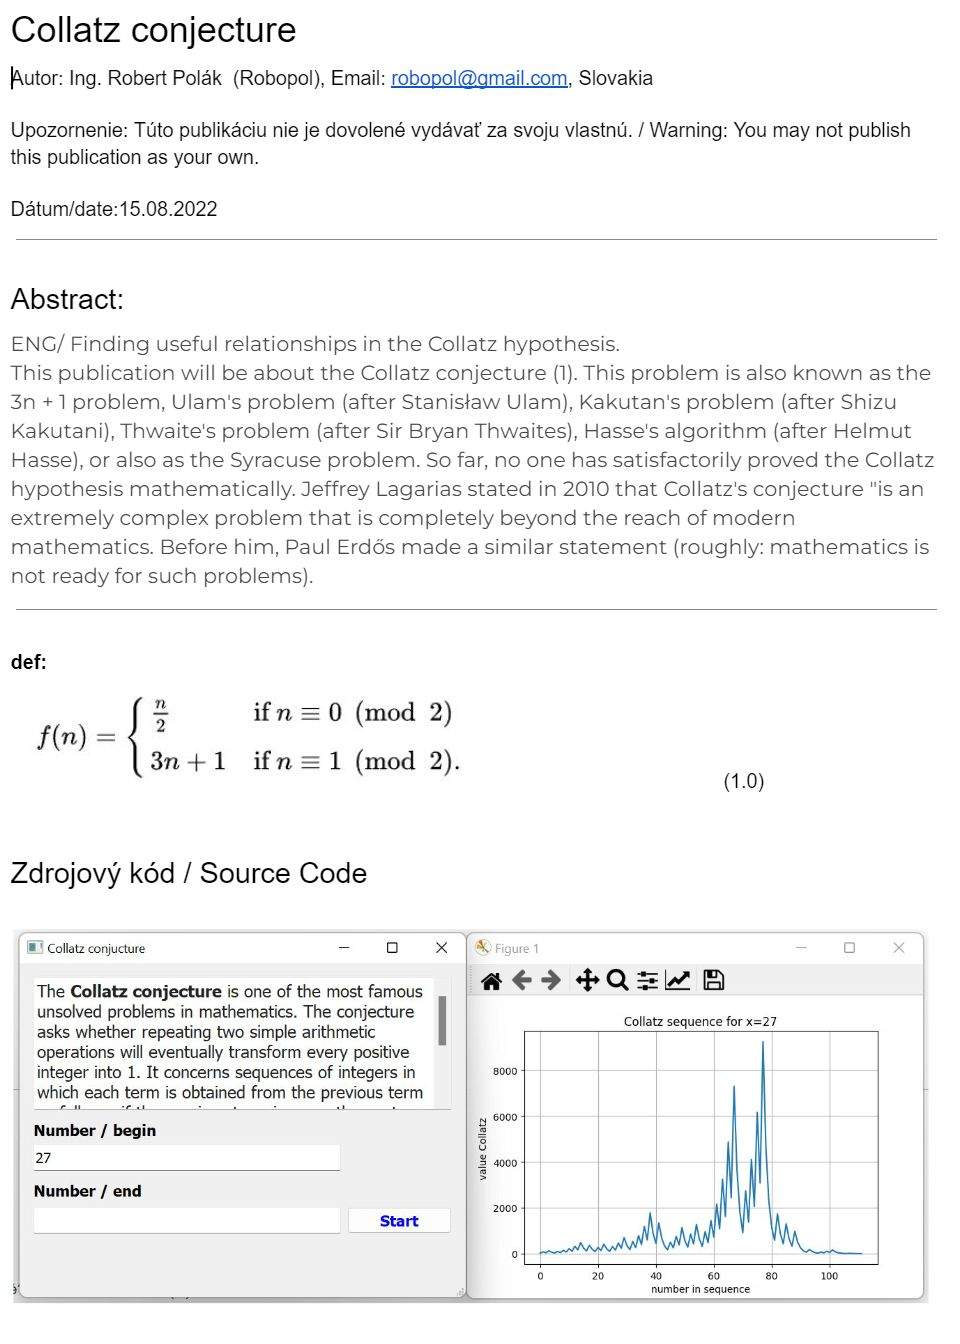 Collatz conjucture publication